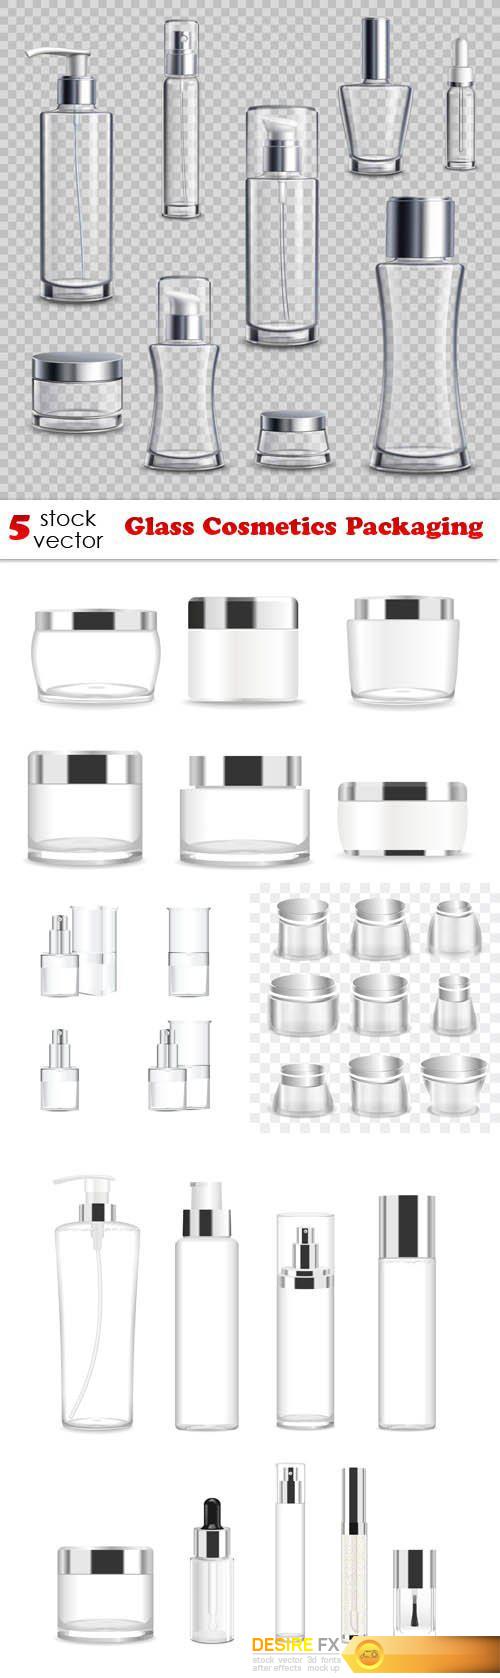 Vectors - Glass Cosmetics Packaging